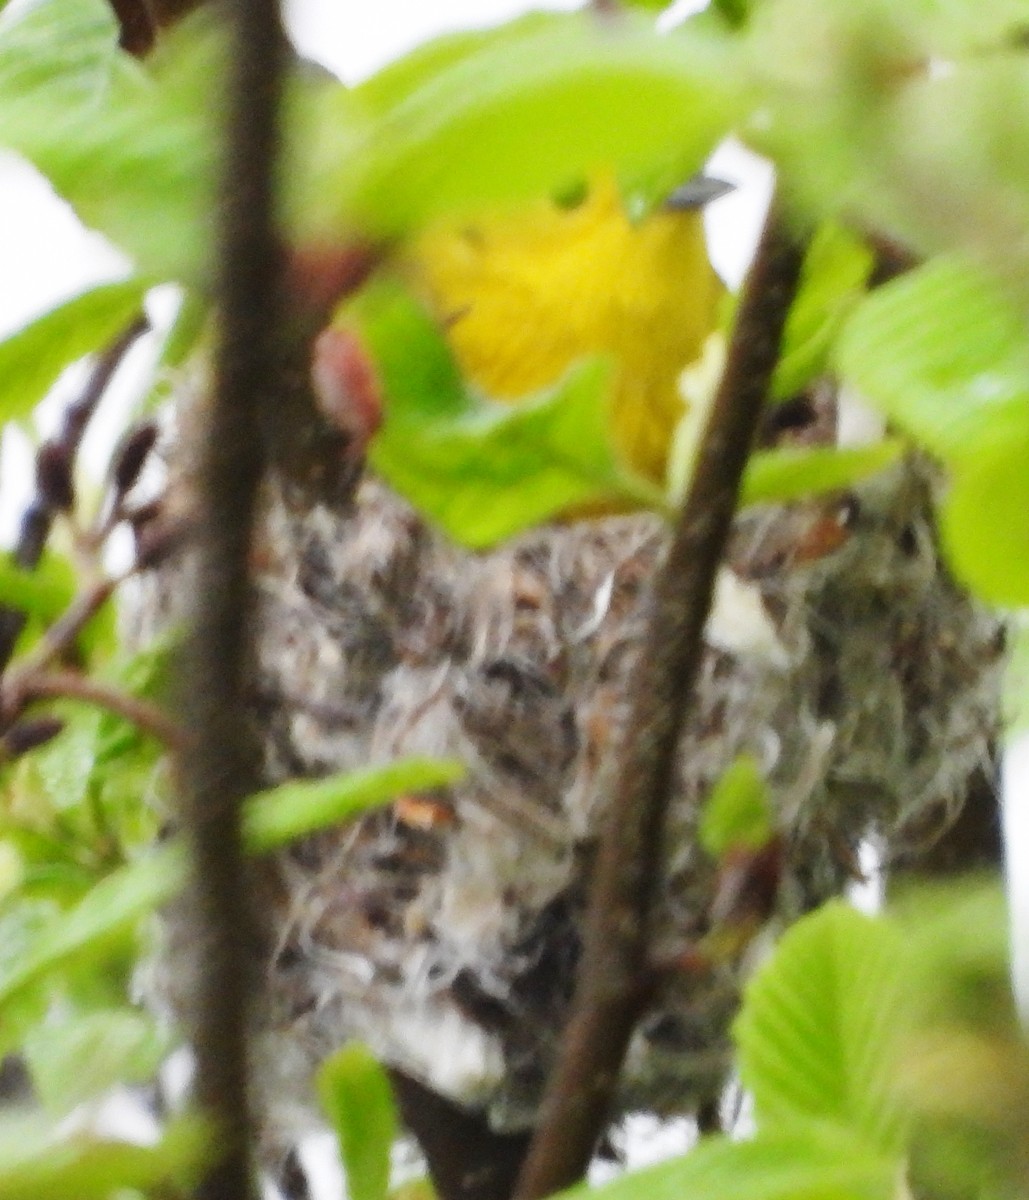 Yellow Warbler - alan murray